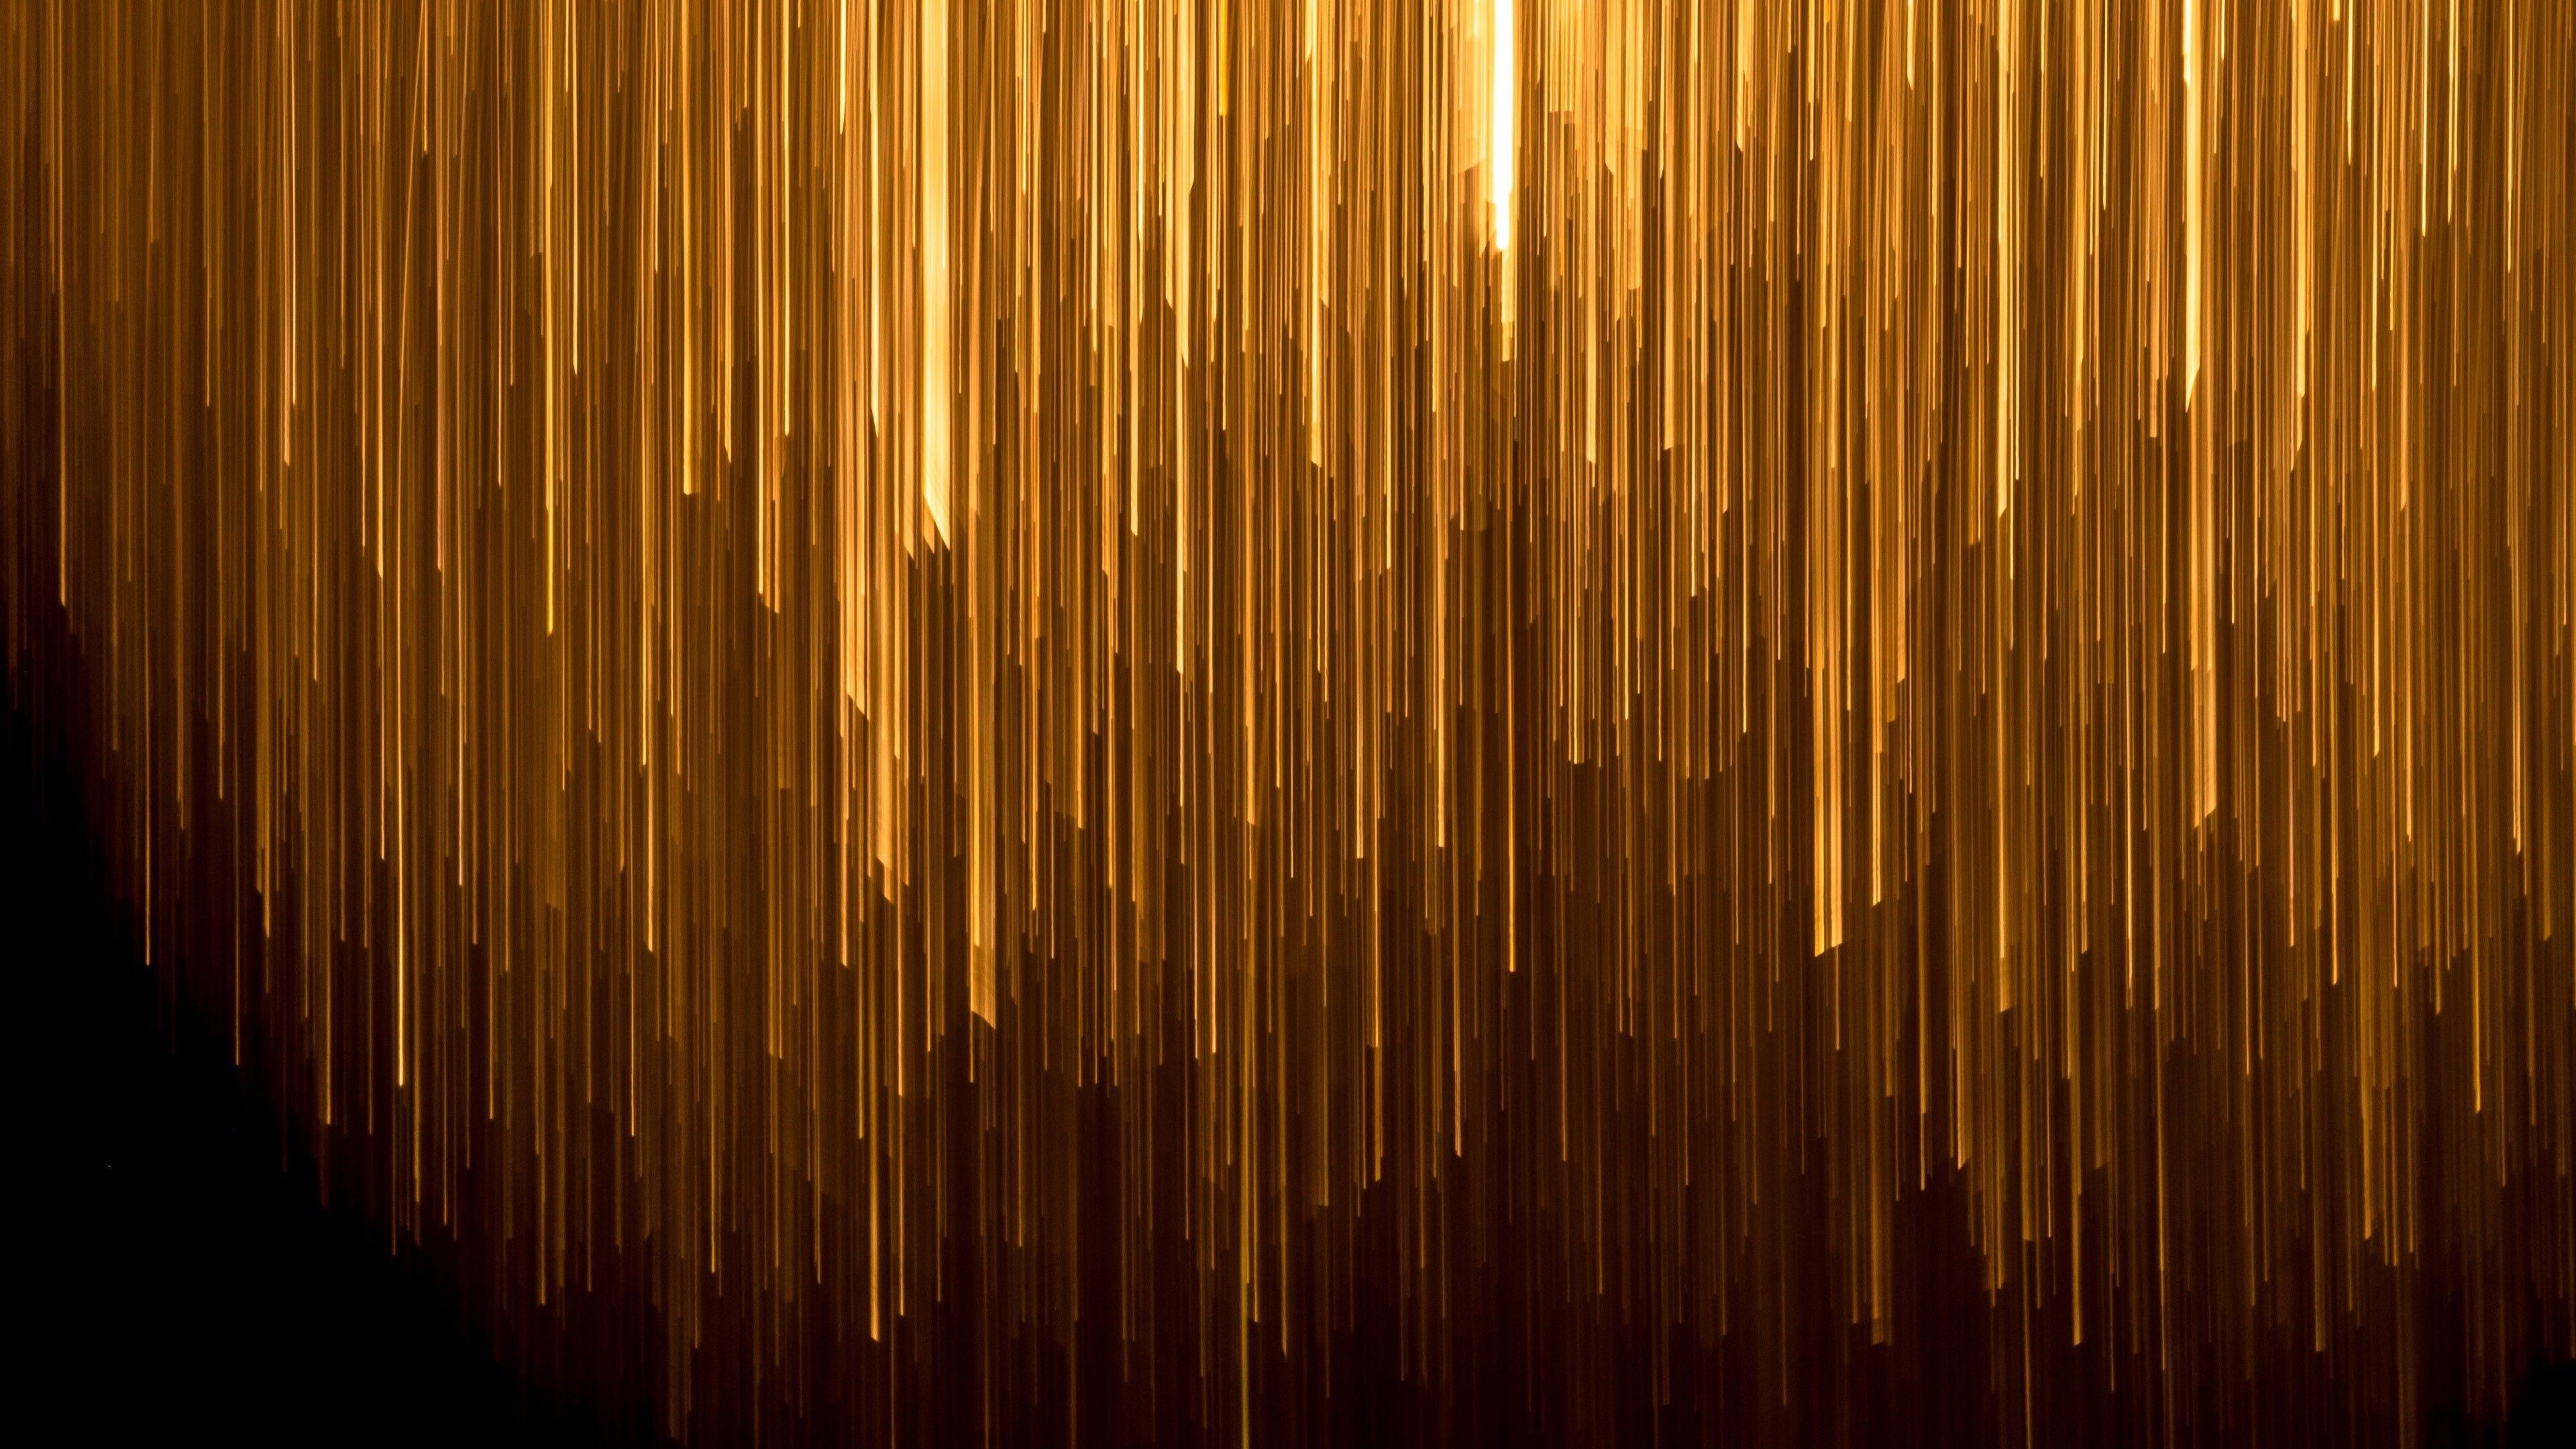 Gold Lights: Golden rain, Glowing glittering lights on golden threads, Shiny sparkling light and shimmer. 3840x2160 4K Wallpaper.